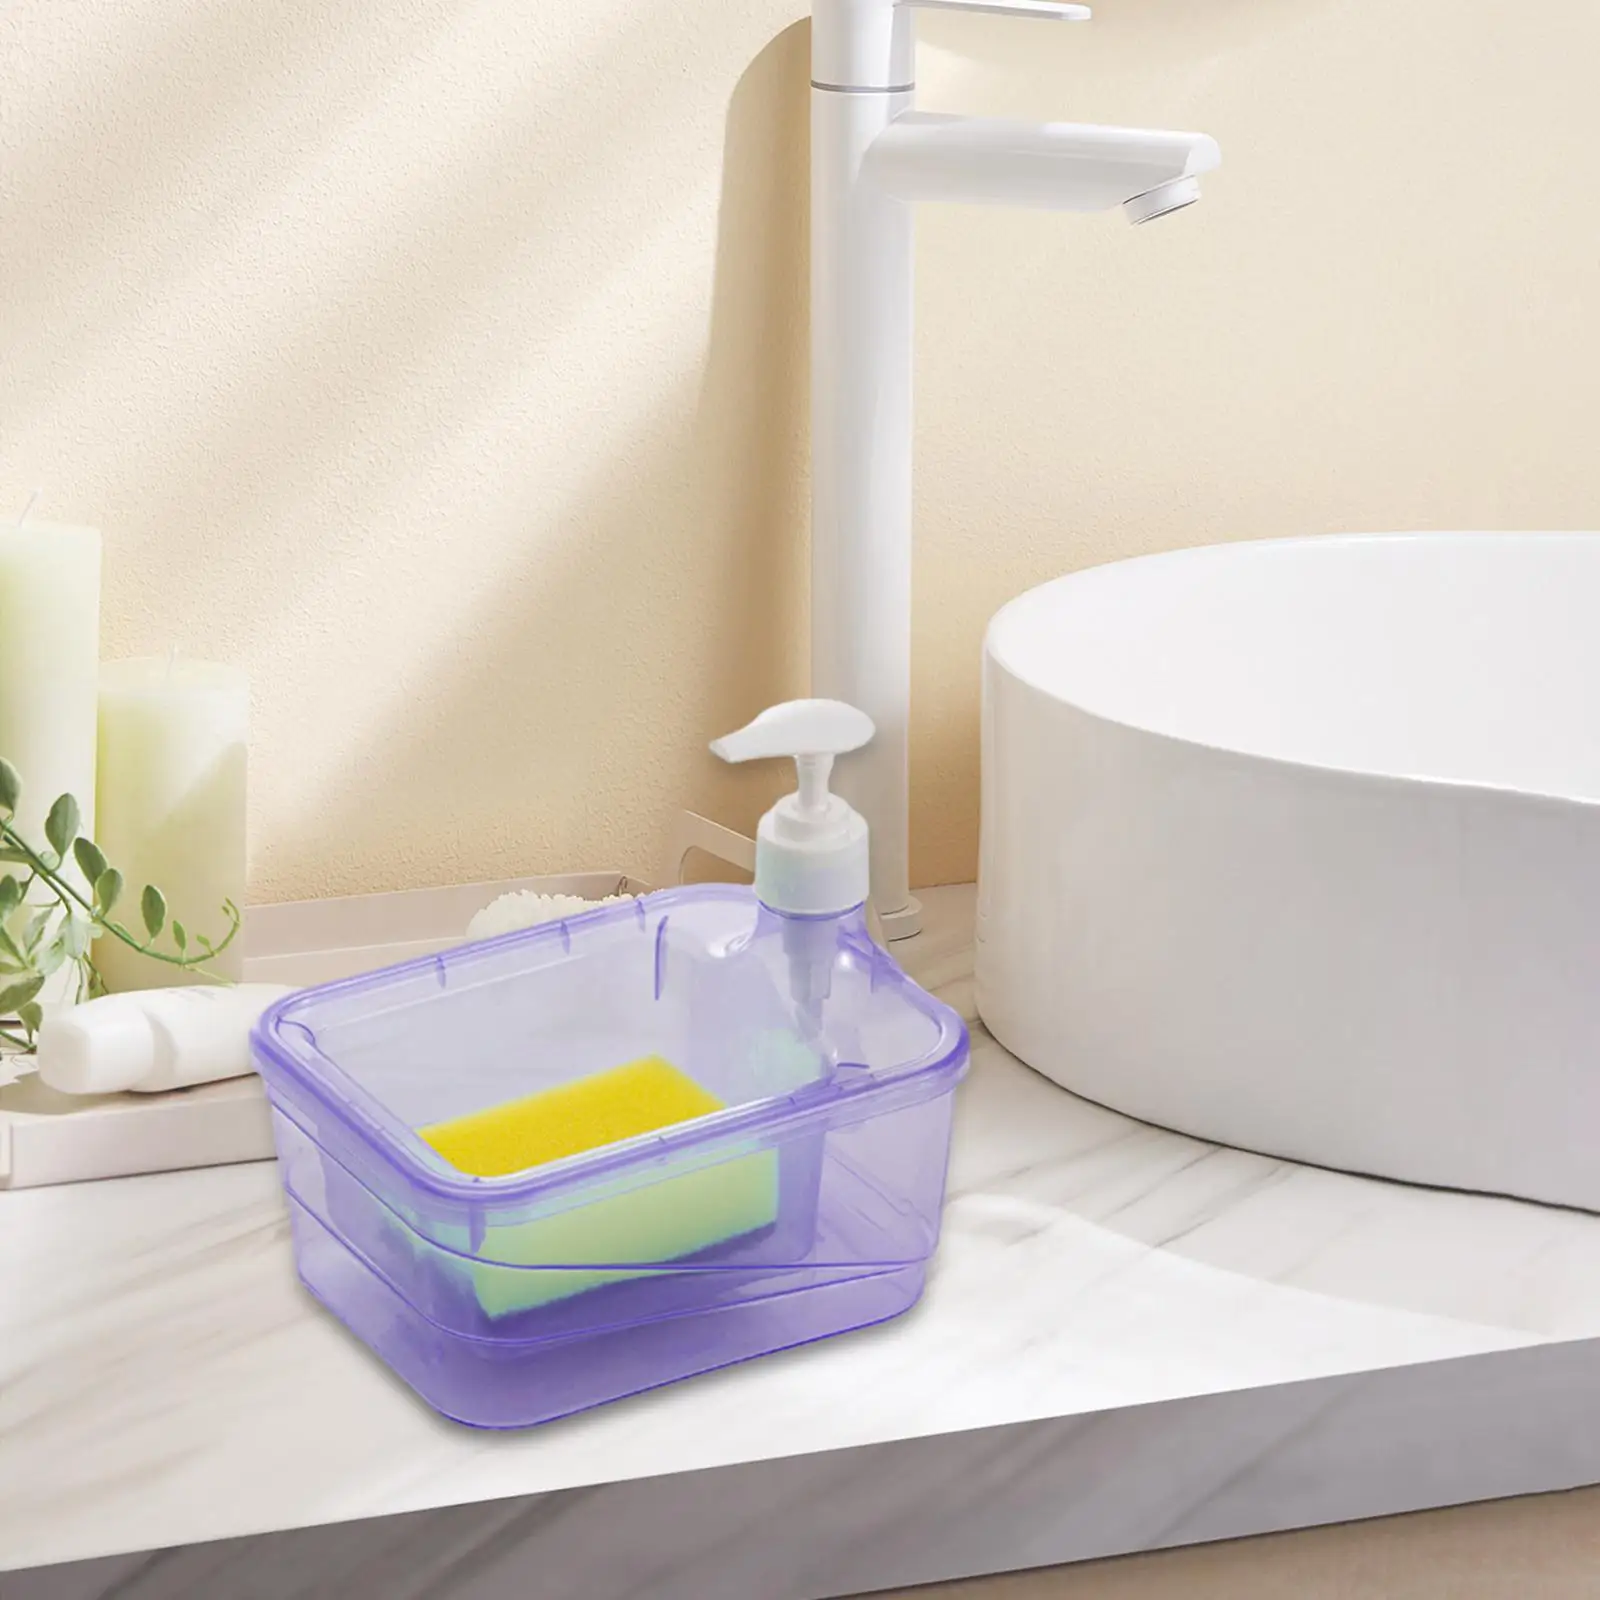 Dish Soap Dispenser and Sponge Holder Multifunctional Practical Compact Soap Liquid Pump Bottle for Bathroom Cafe Kitchen Hotel